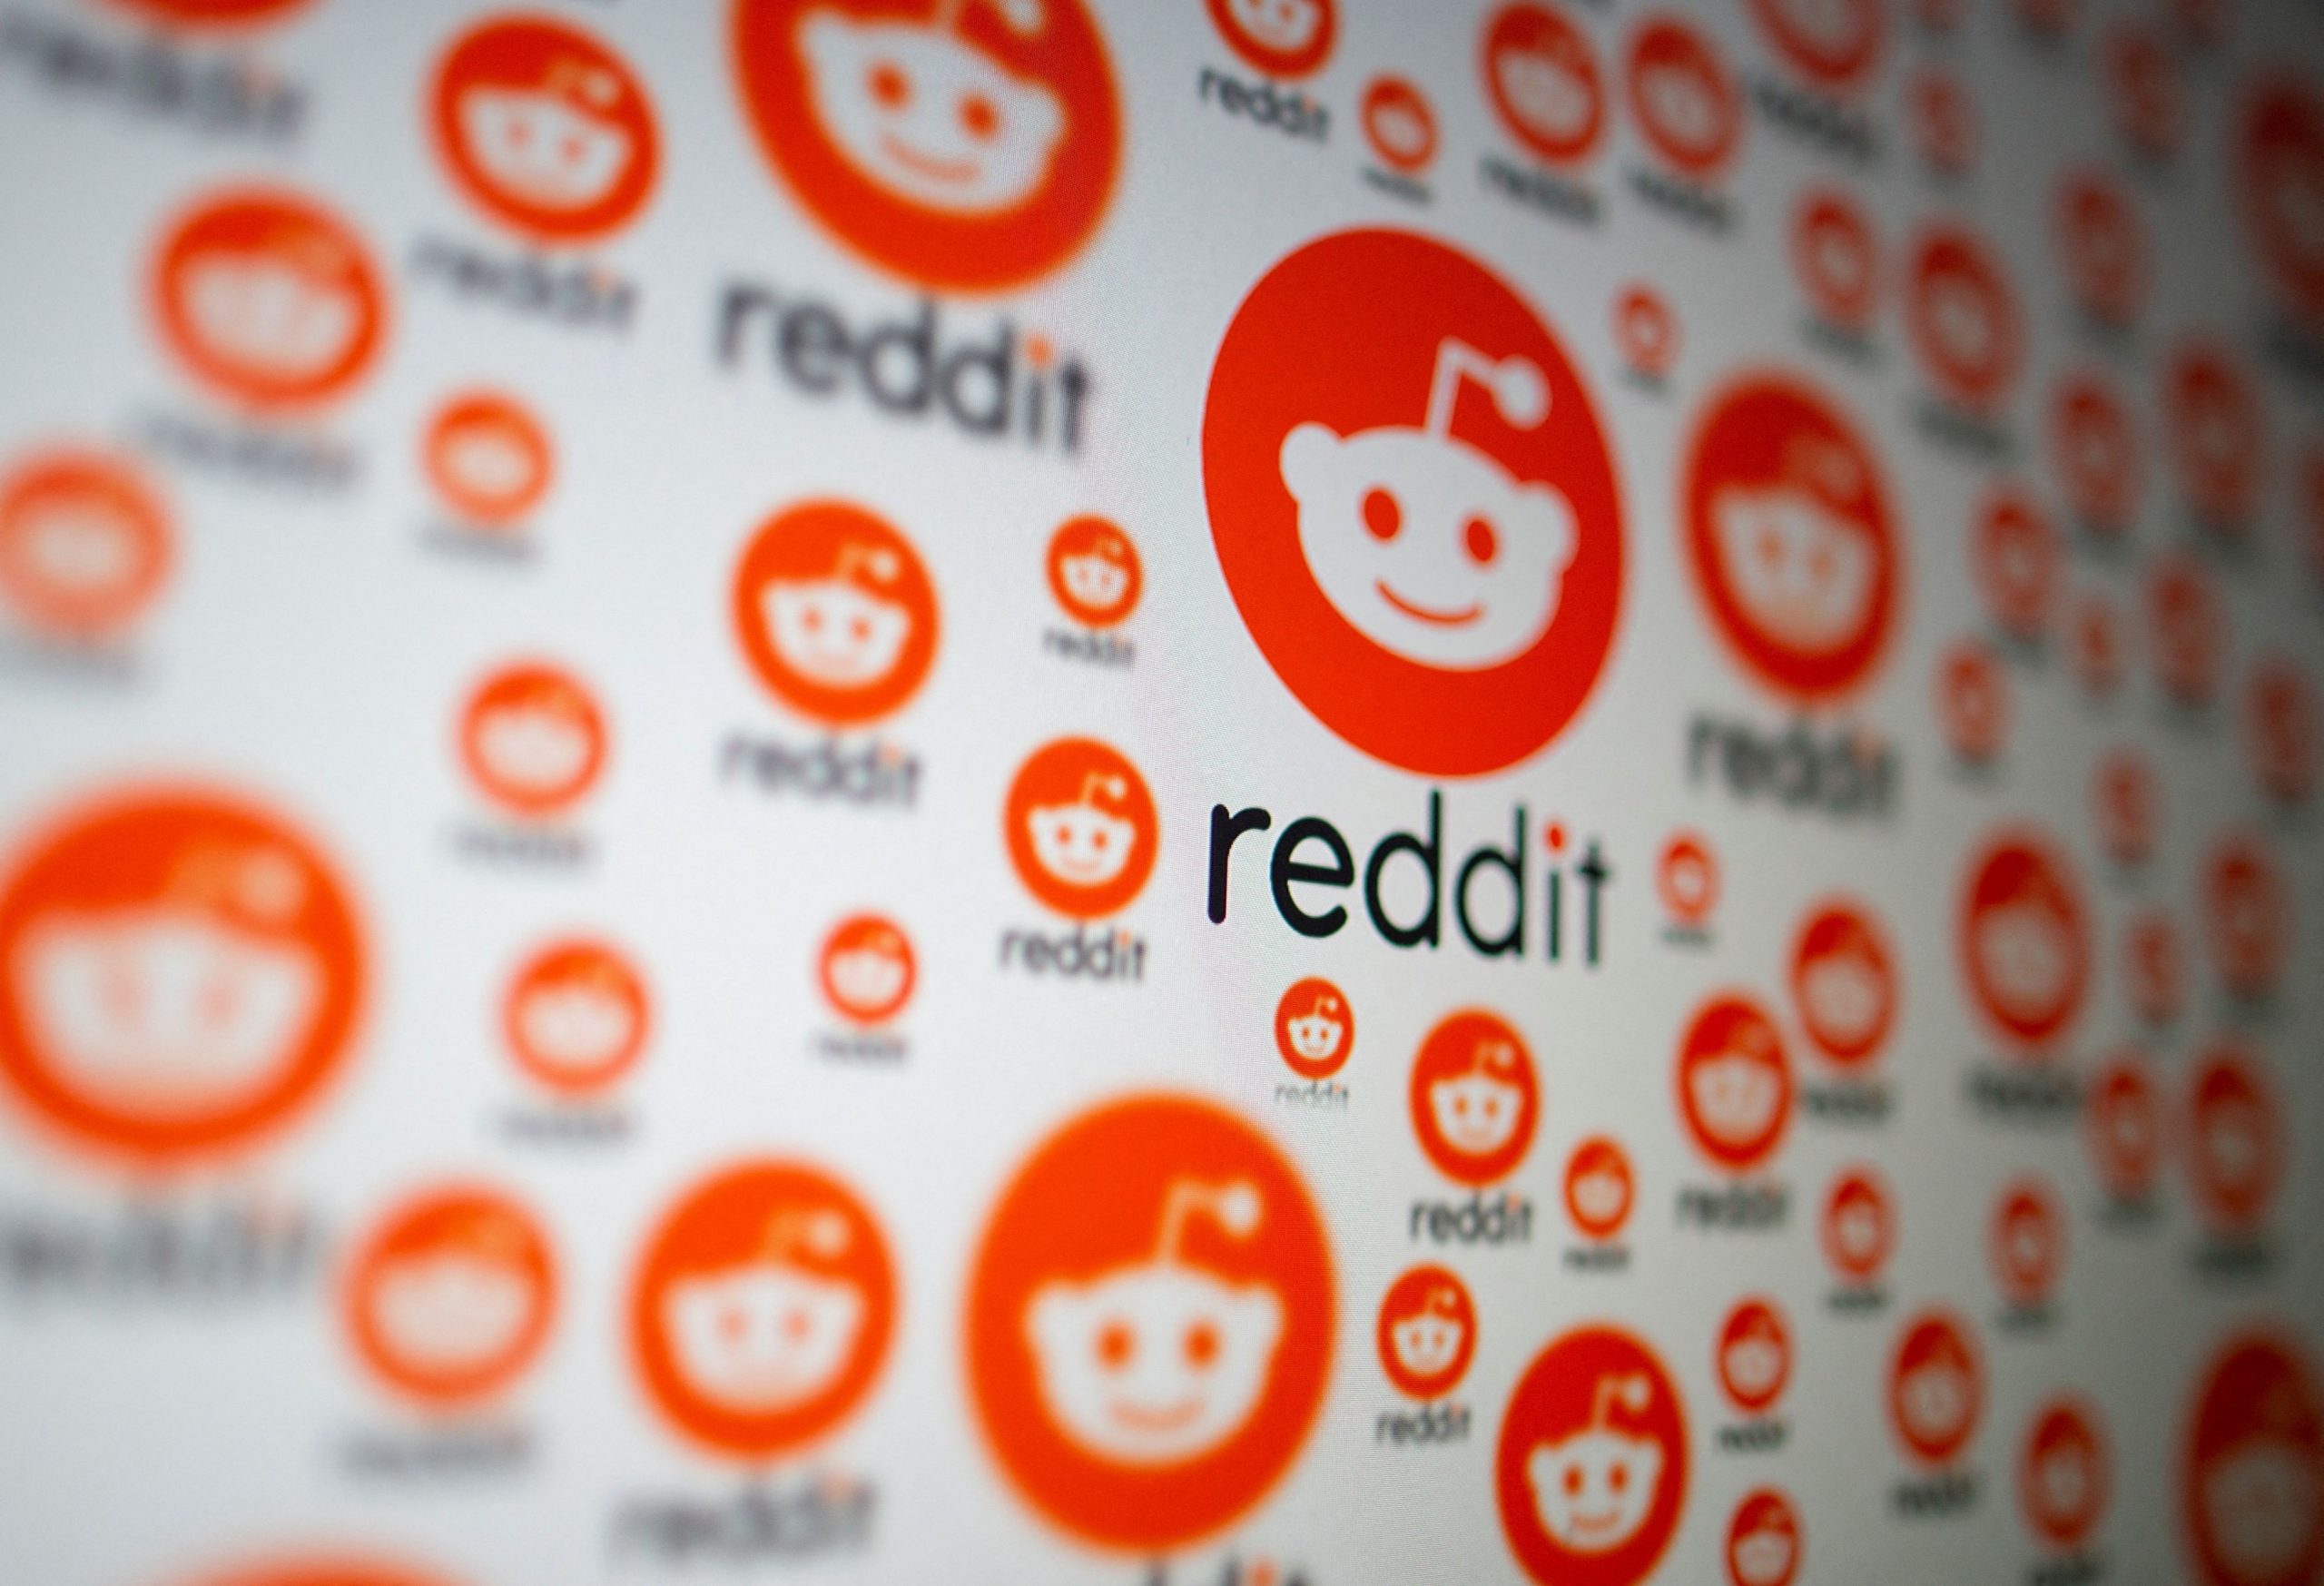 Reddit: Άνοδος έως και 11% για τη μετοχή μετά τα αυξημένα κέρδη